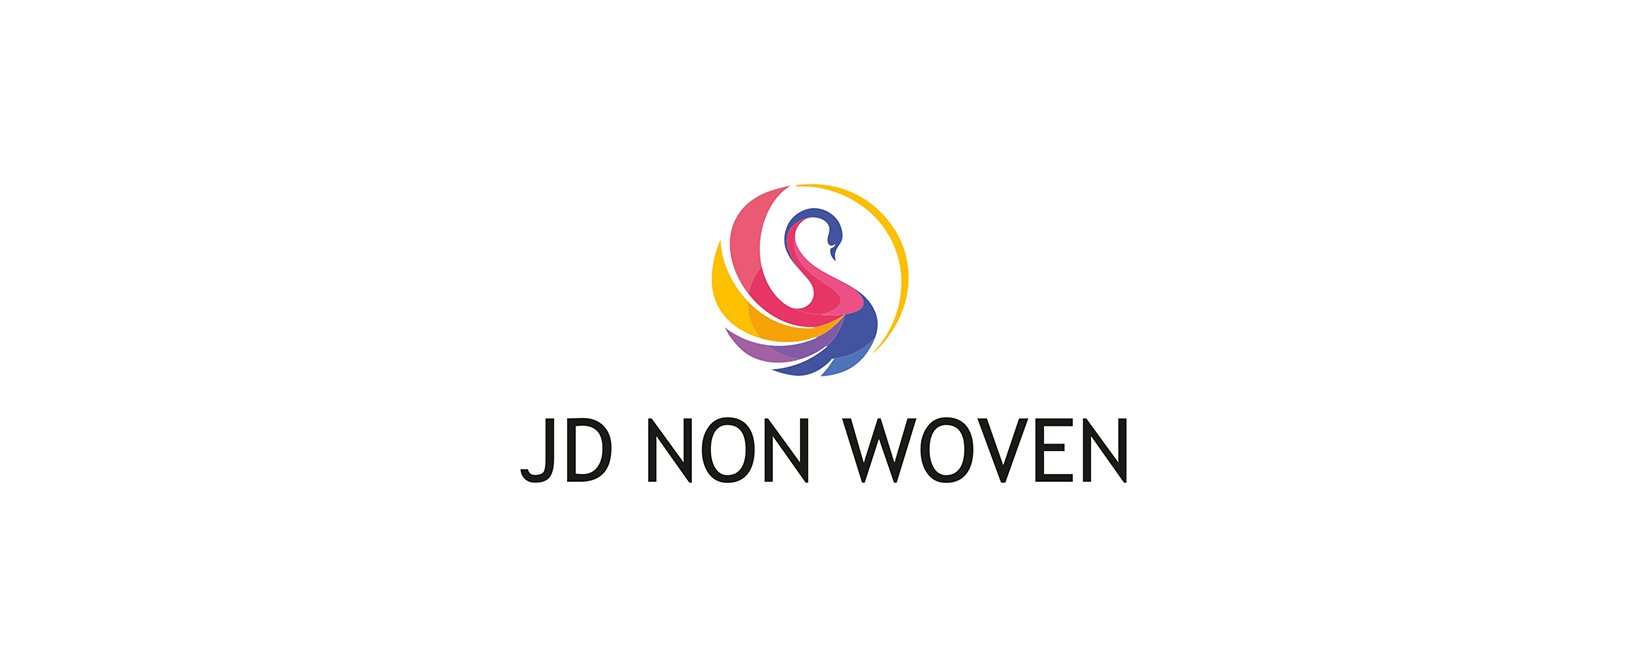 jd-non-woven-white-logo